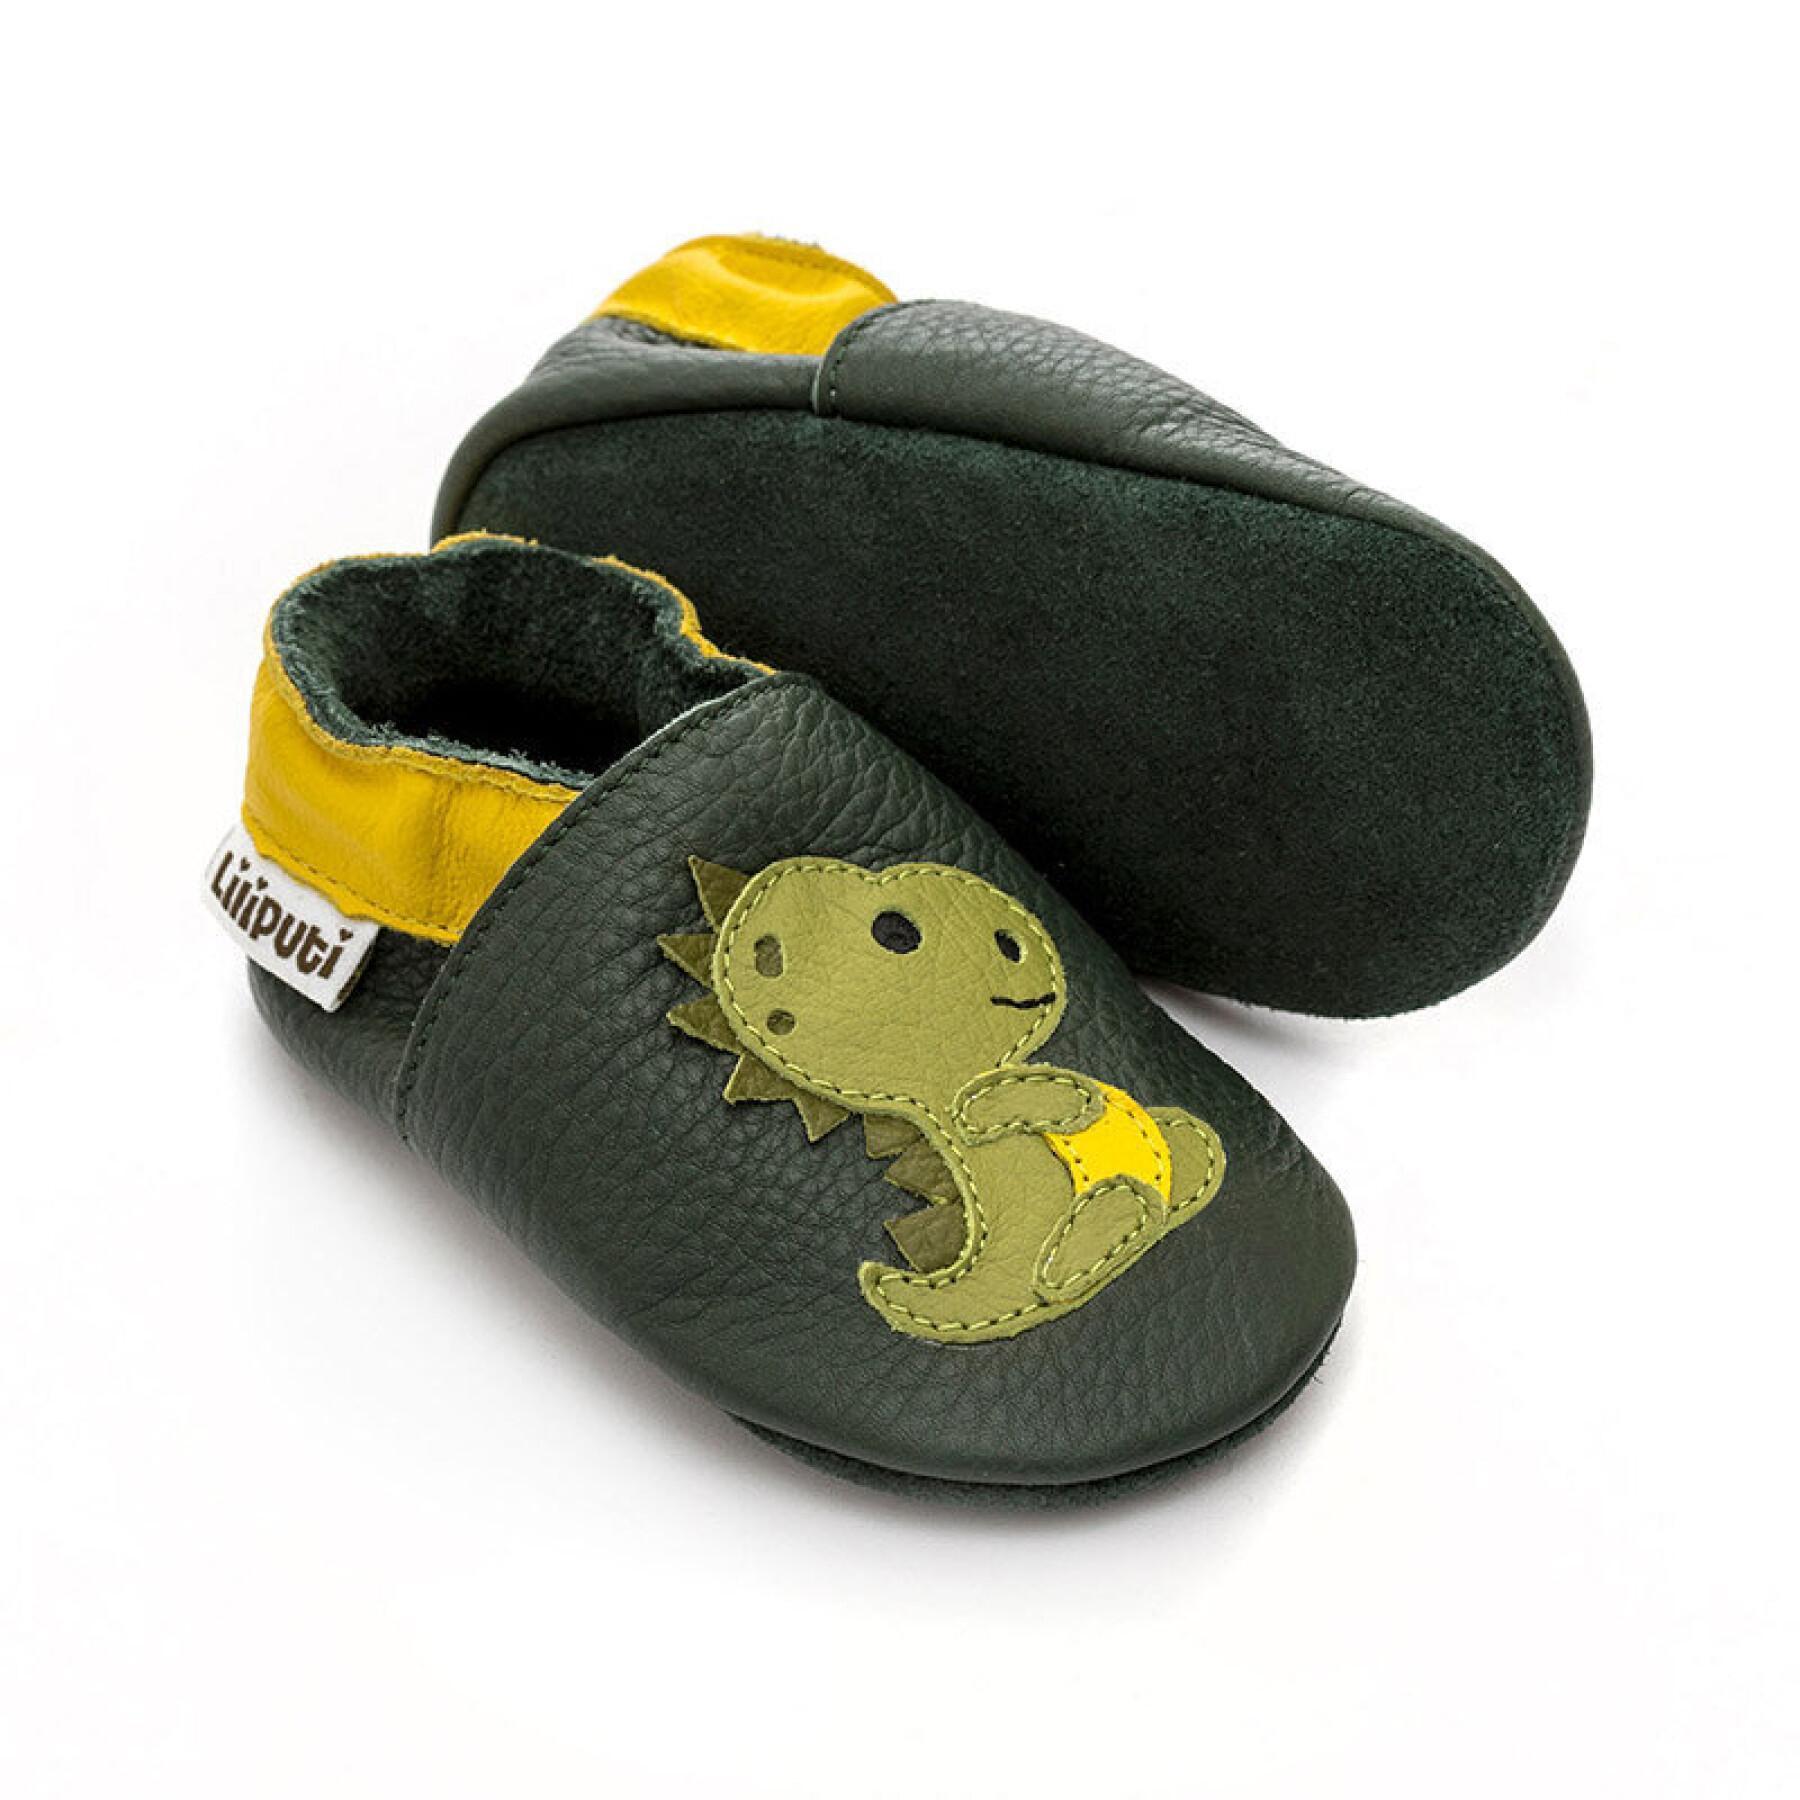 Soft baby boy slippers Liliputi Dino